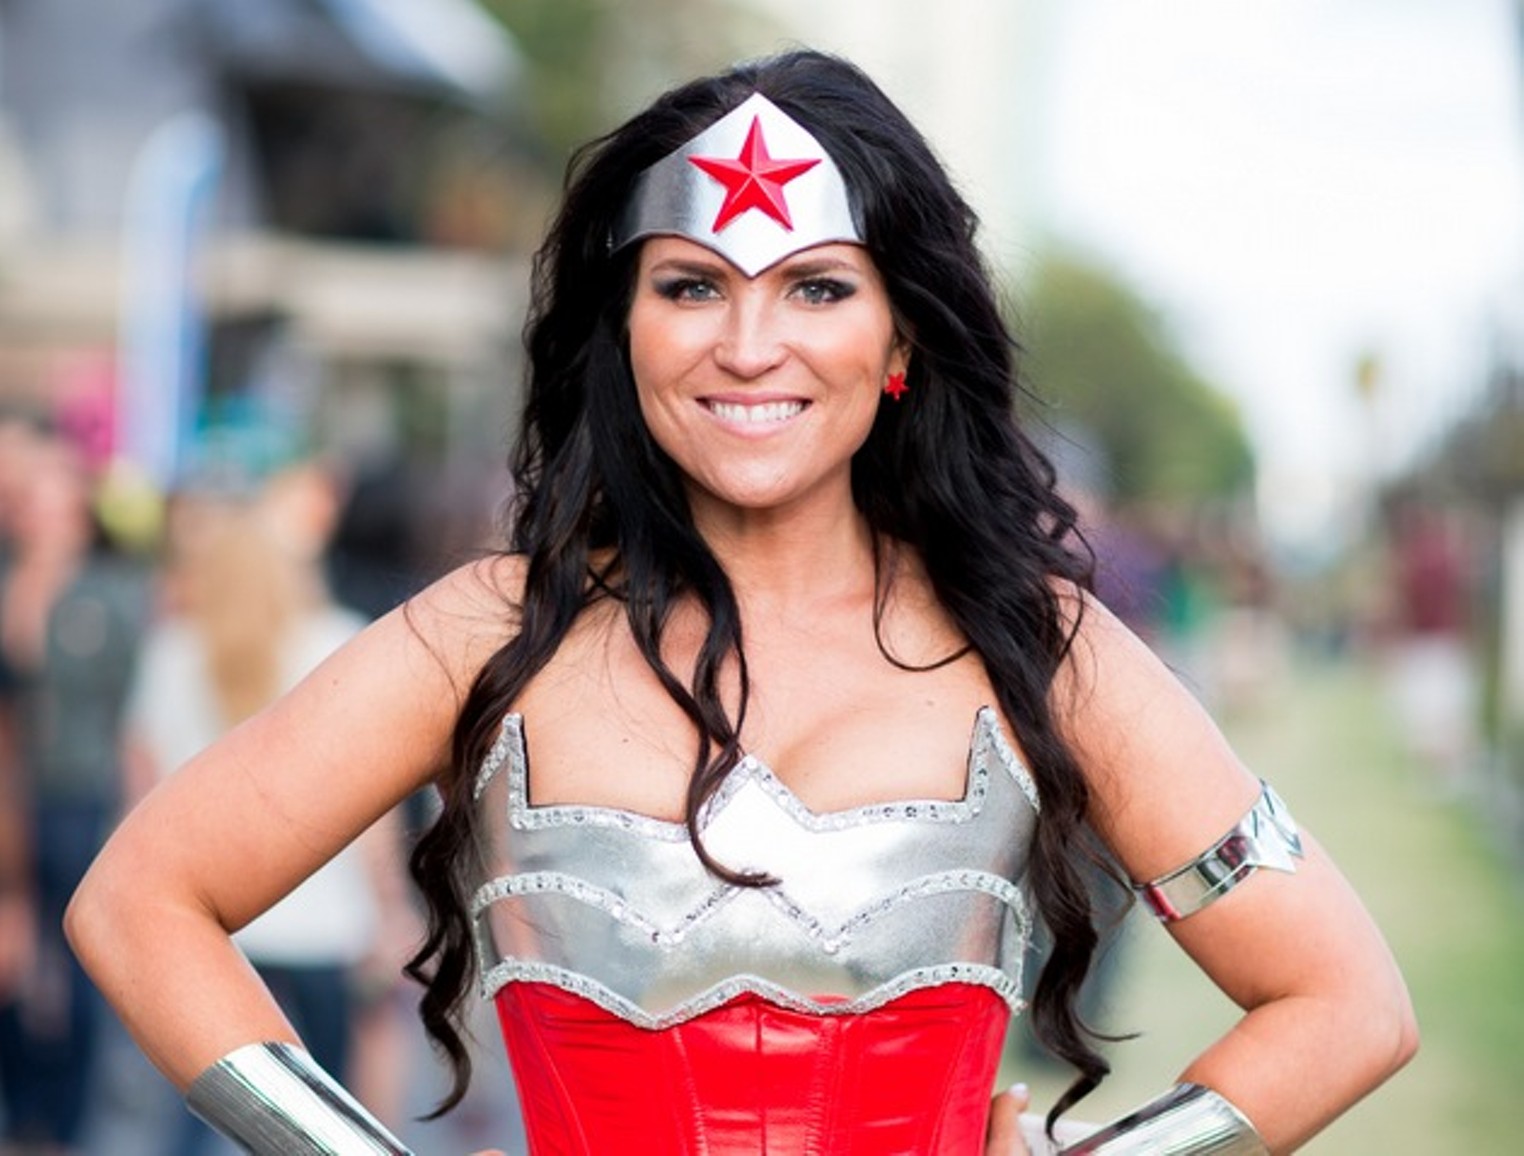 The Wonder Women of ComicCon Miami Miami New Times The Leading